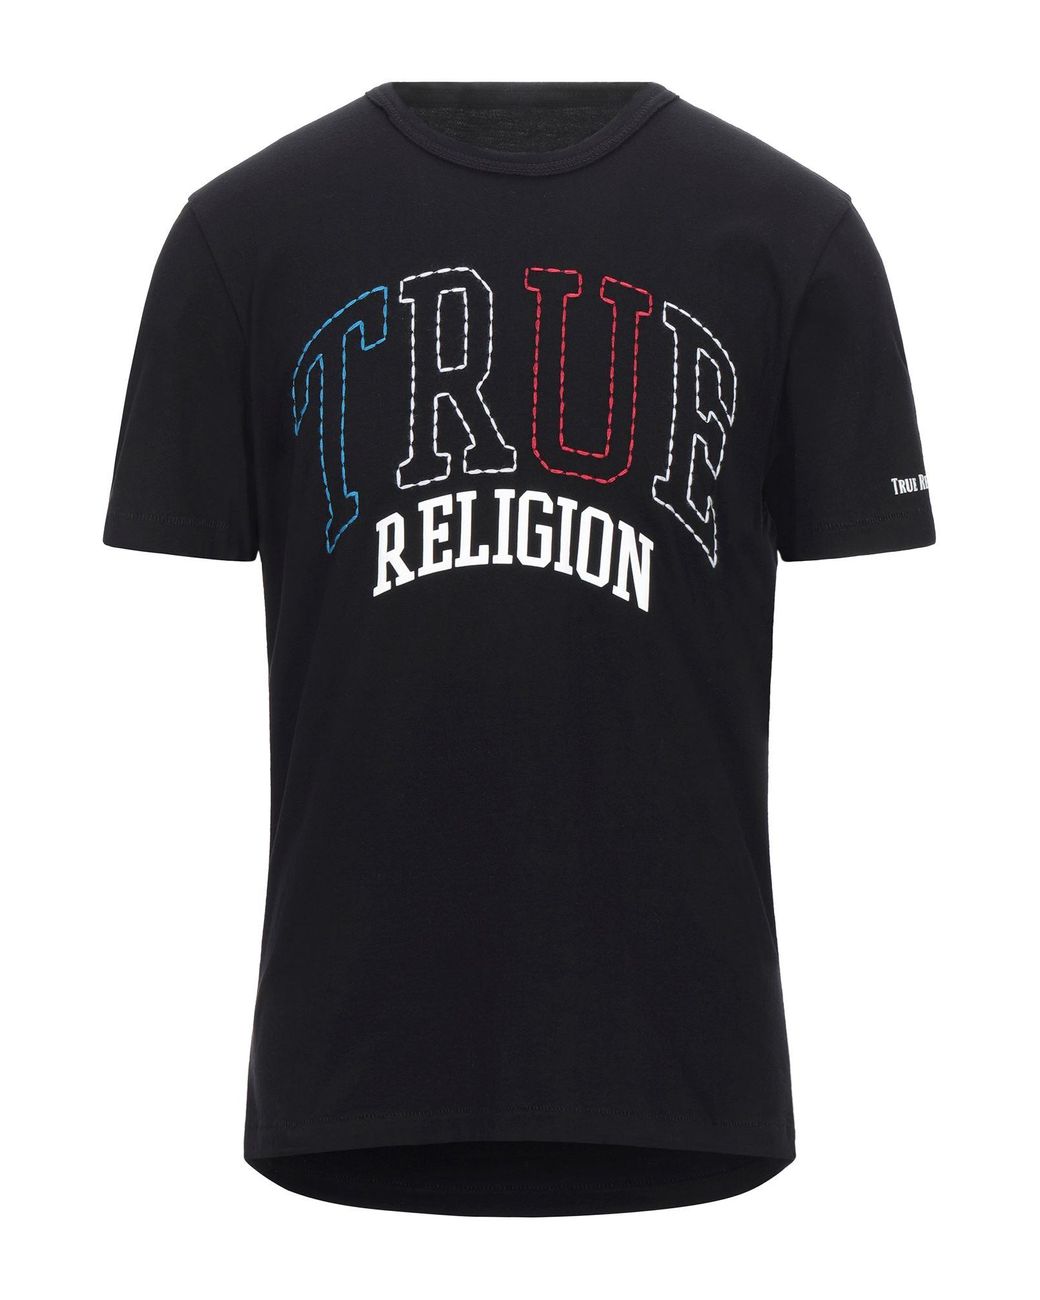 True Religion Cotton T-shirt in Black for Men - Lyst